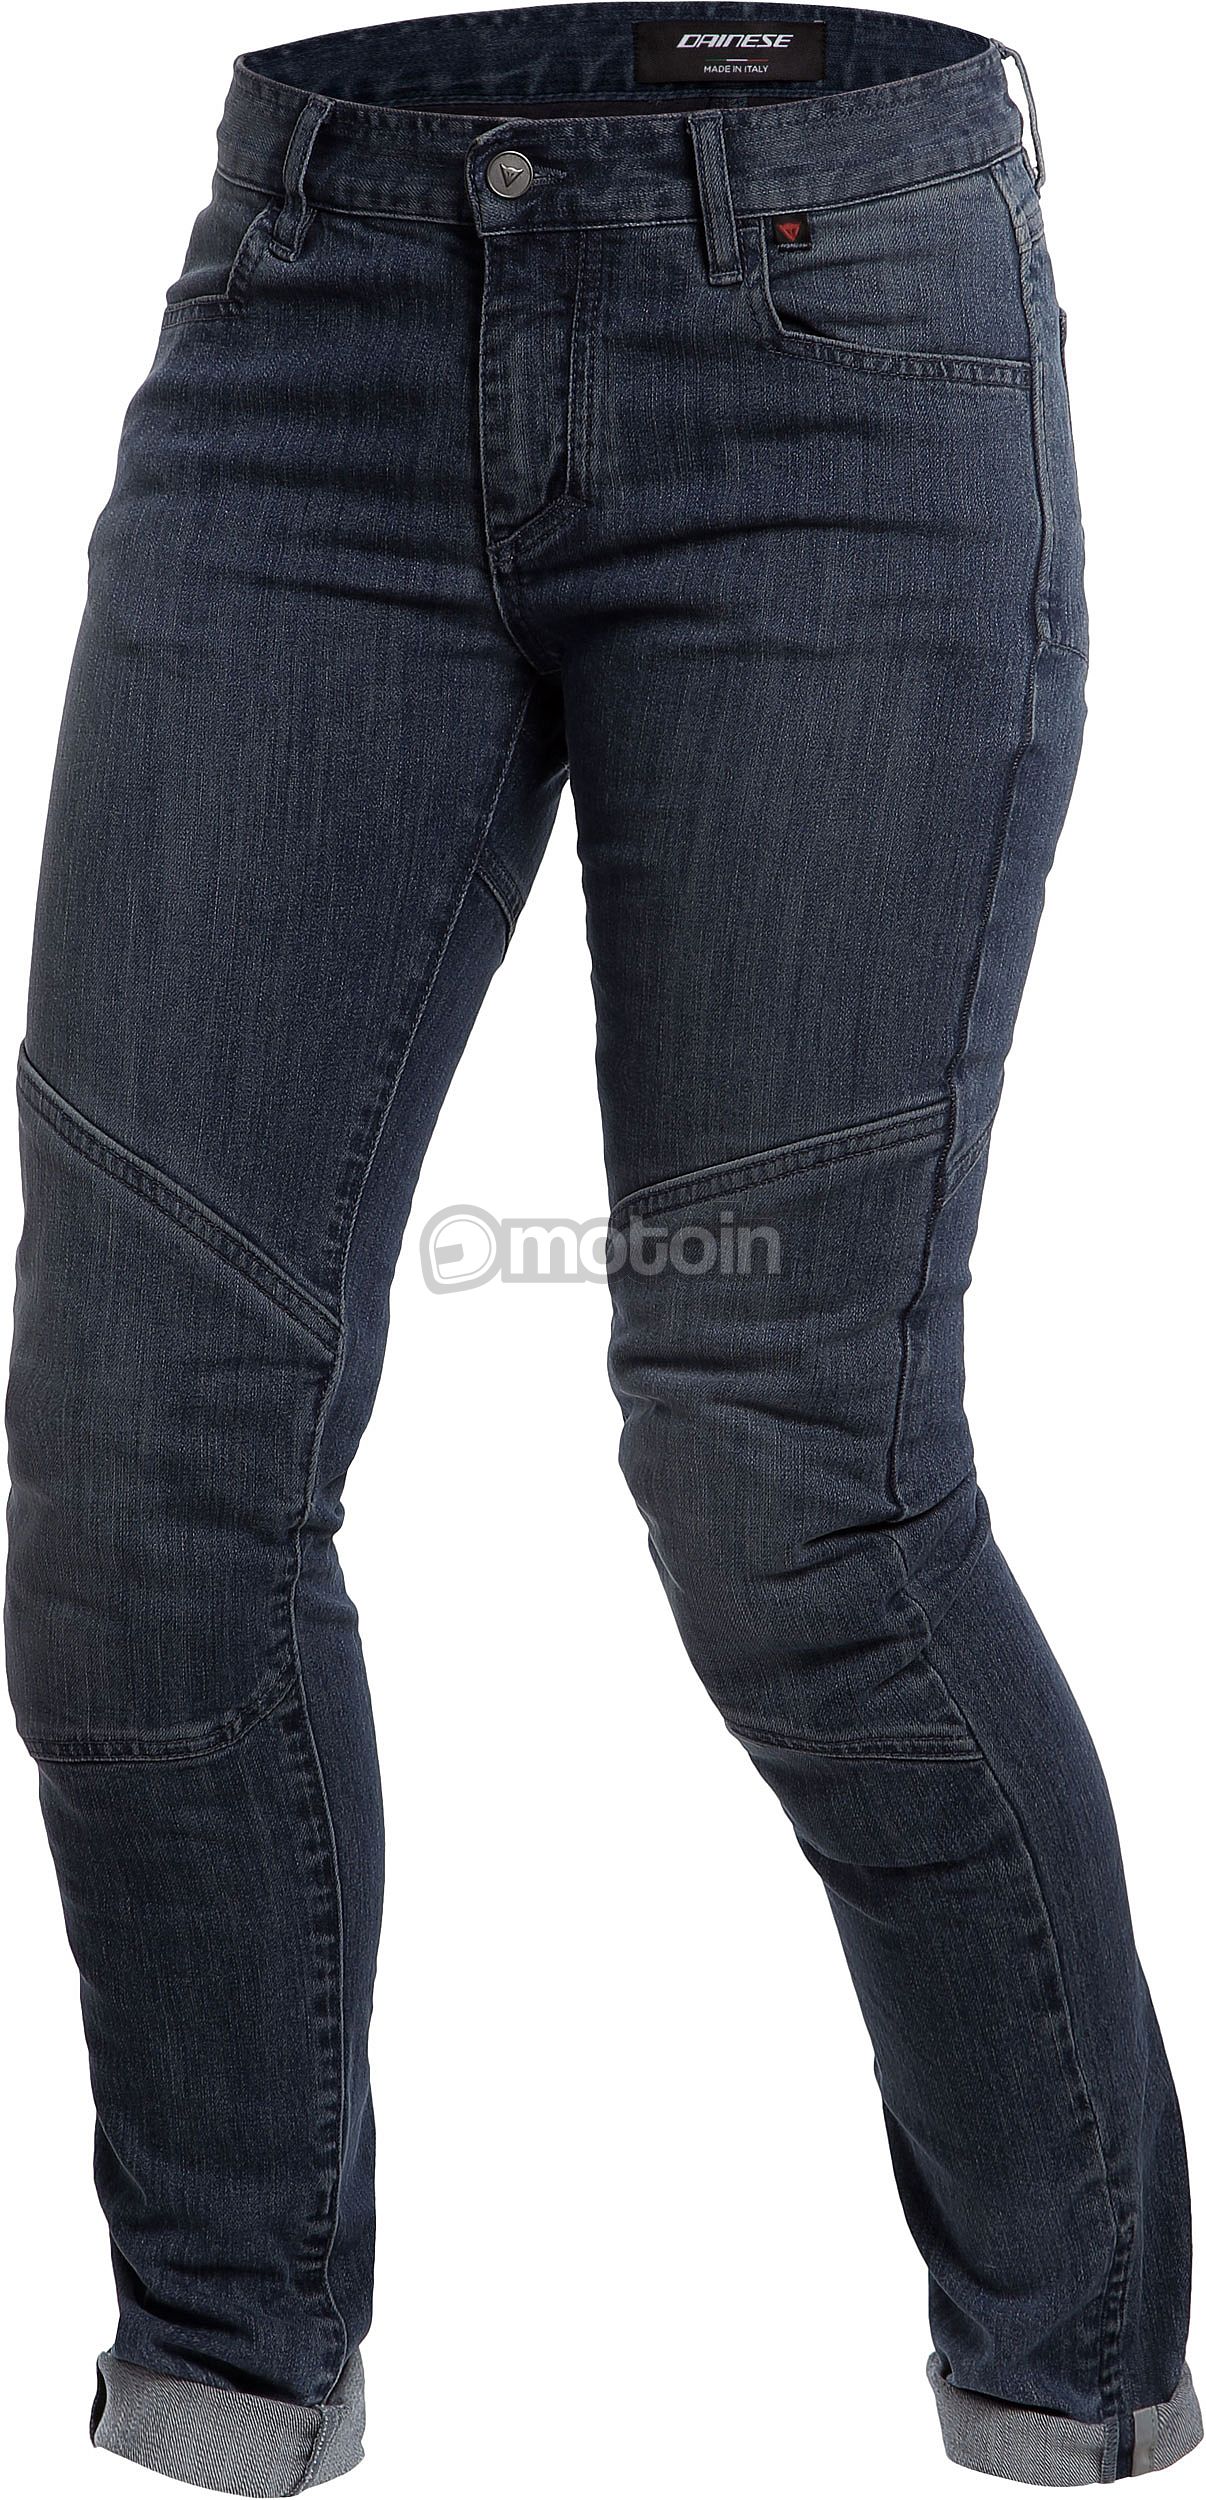 Dainese Amelia Slim, femmes jeans